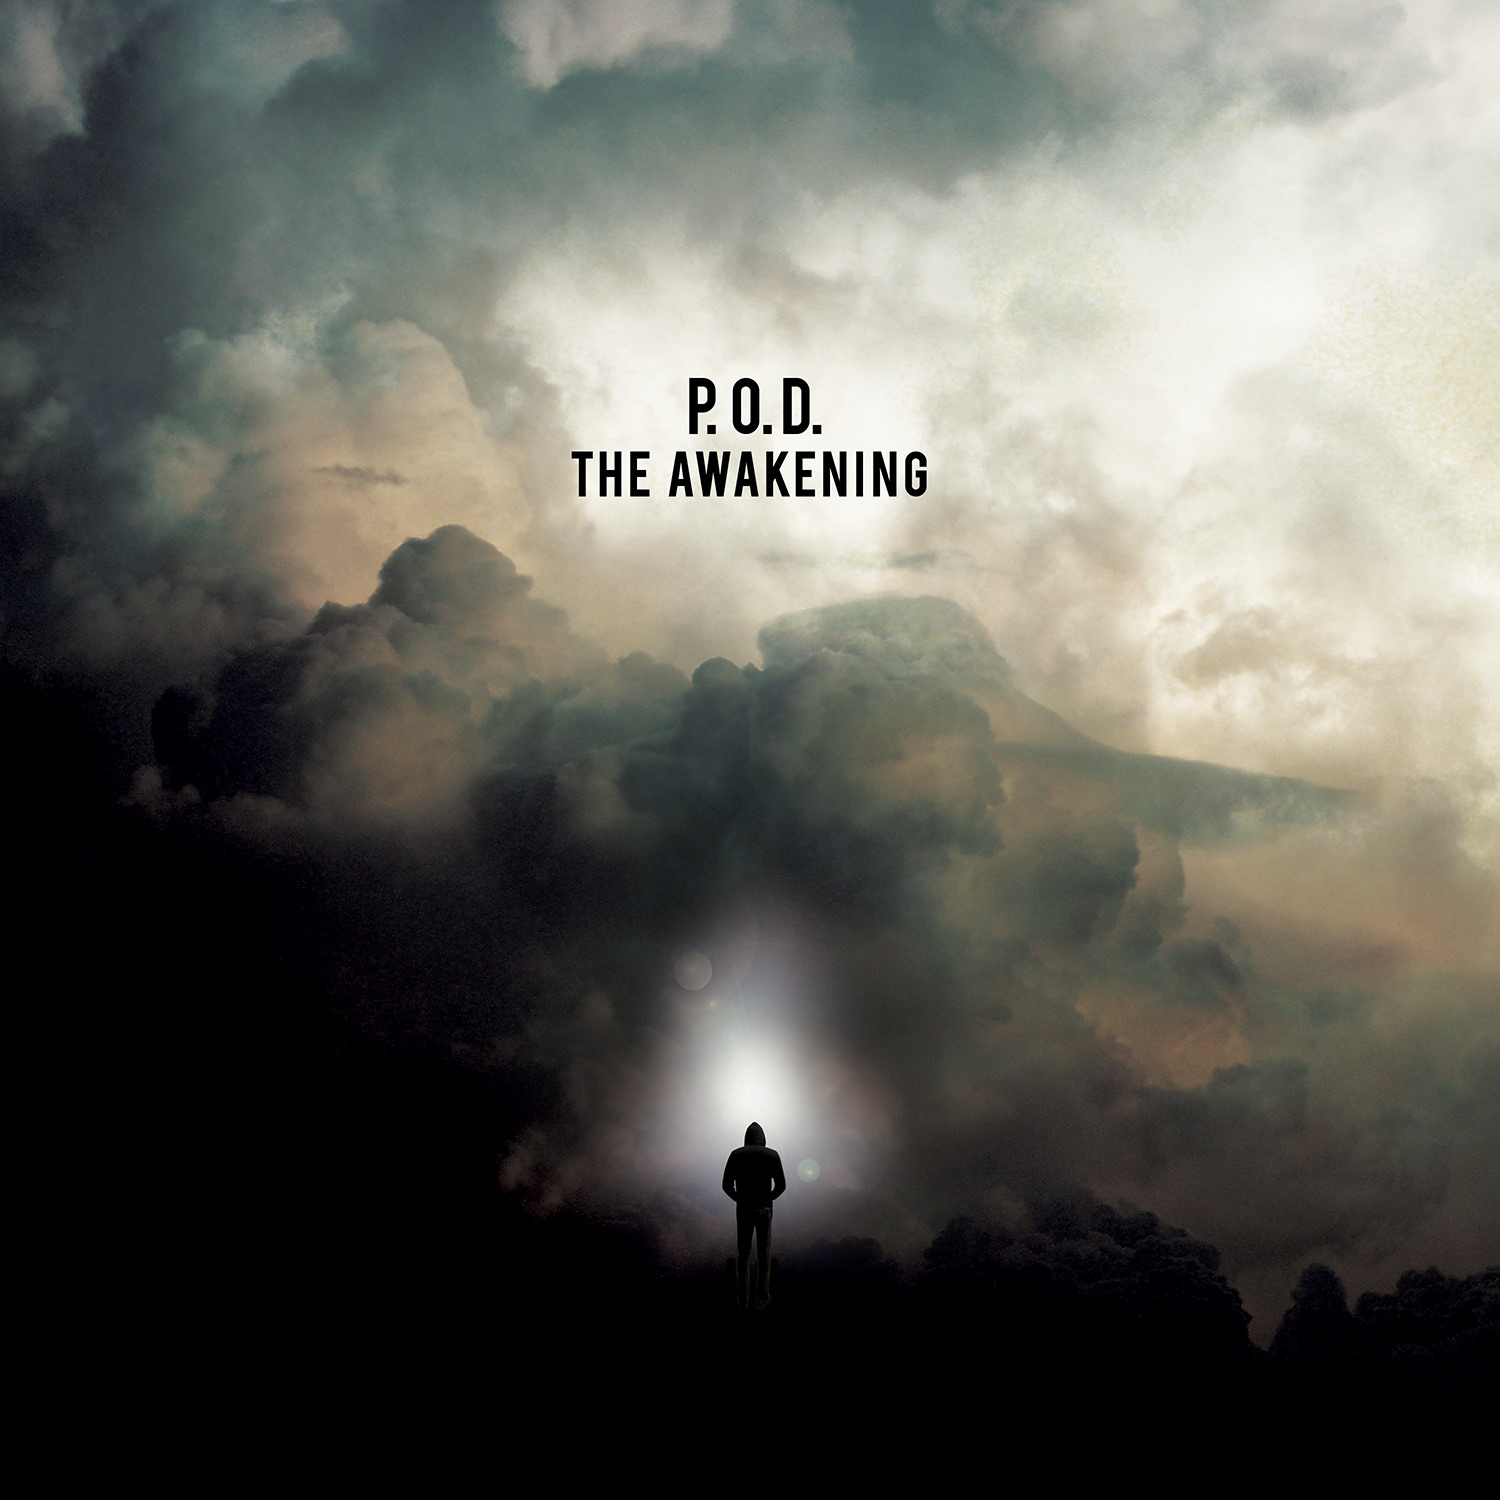 P.O.D. - The Awakening (2015) [ProStudioMasters FLAC 24bit/96kHz]